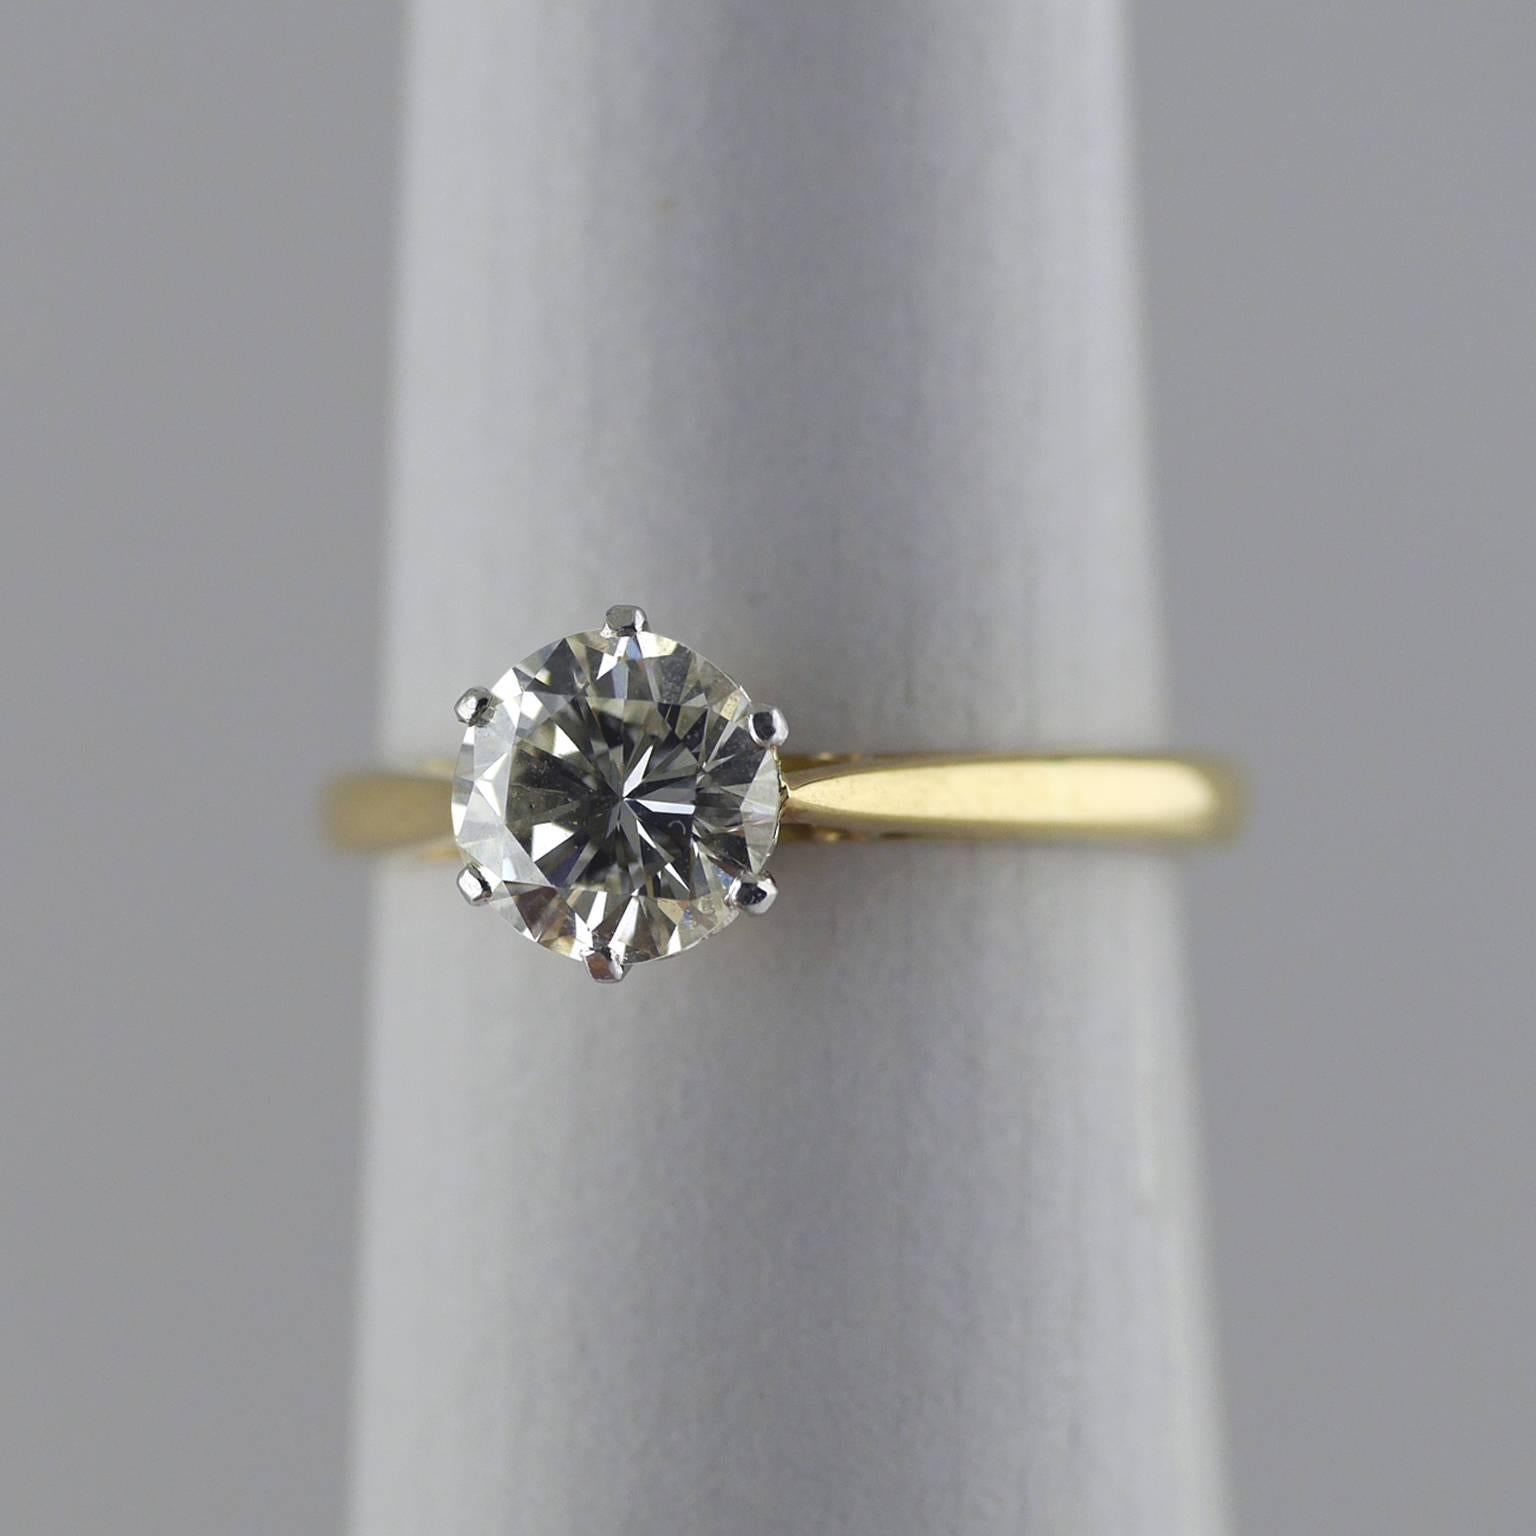 18 carat Art Deco Round Brilliant Cut Diamond ring circa 1930.

1.15ct Brilliant cut diamond, J, SI1, set in an 18ct yellow gold shank. British Gemmological Institute Certificate.

Ring Size:

M 1/2(UK)
6 1/2 (US)
13 (FR/JP)

Courtesy resizing to